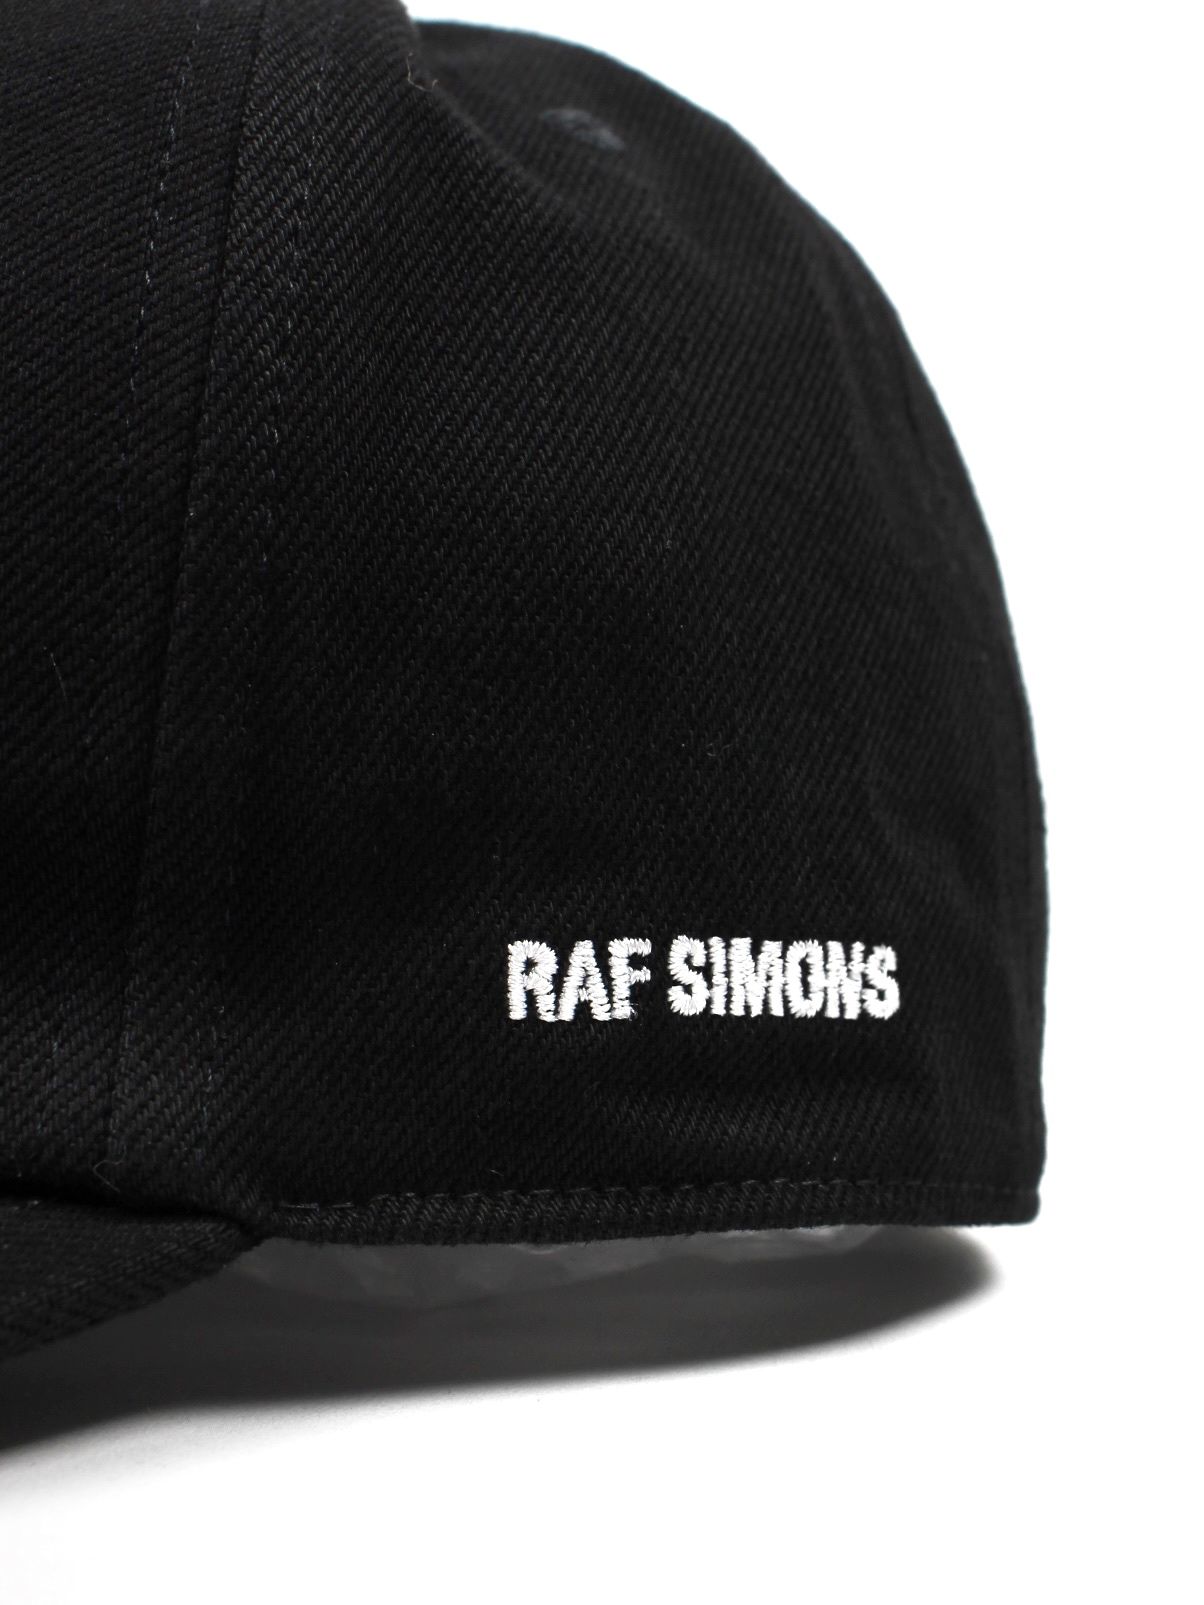 RAF SIMONS - 【23SS】エンブロイダリー Rロゴ キャップ / Cap wit R